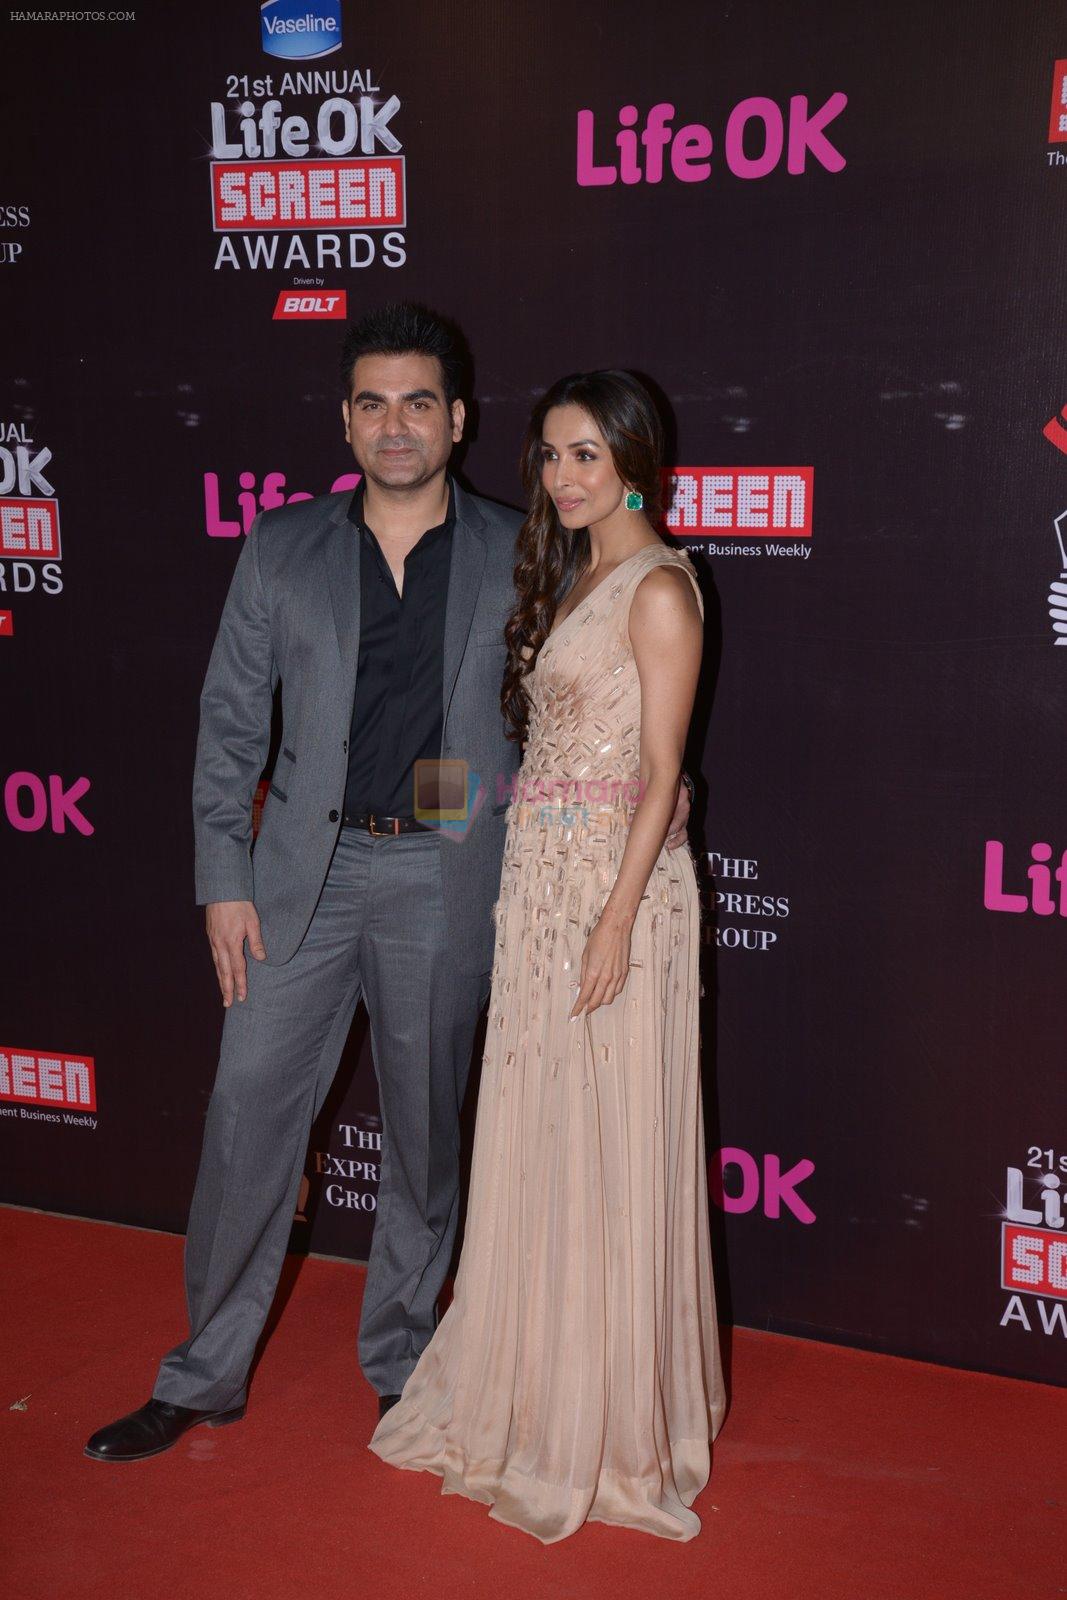 Arbaaz Khan, Malaika Arora Khan at Life Ok Screen Awards red carpet in Mumbai on 14th Jan 2015